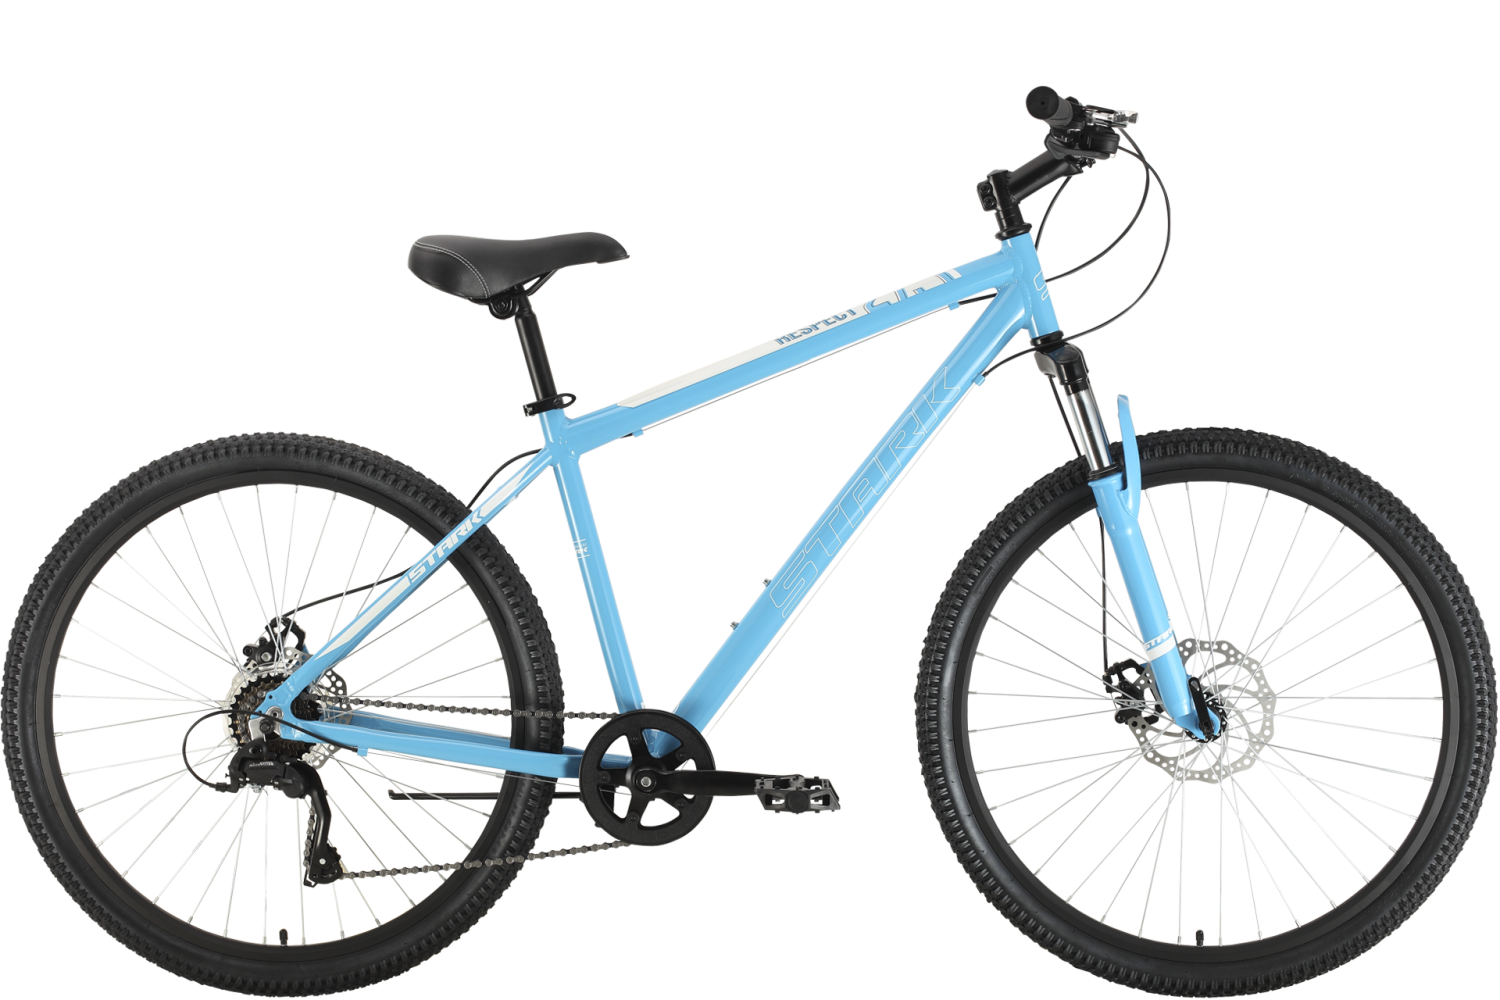 Велосипед Stark'22 Respect 27.1 D Microshift синий/белый 18"